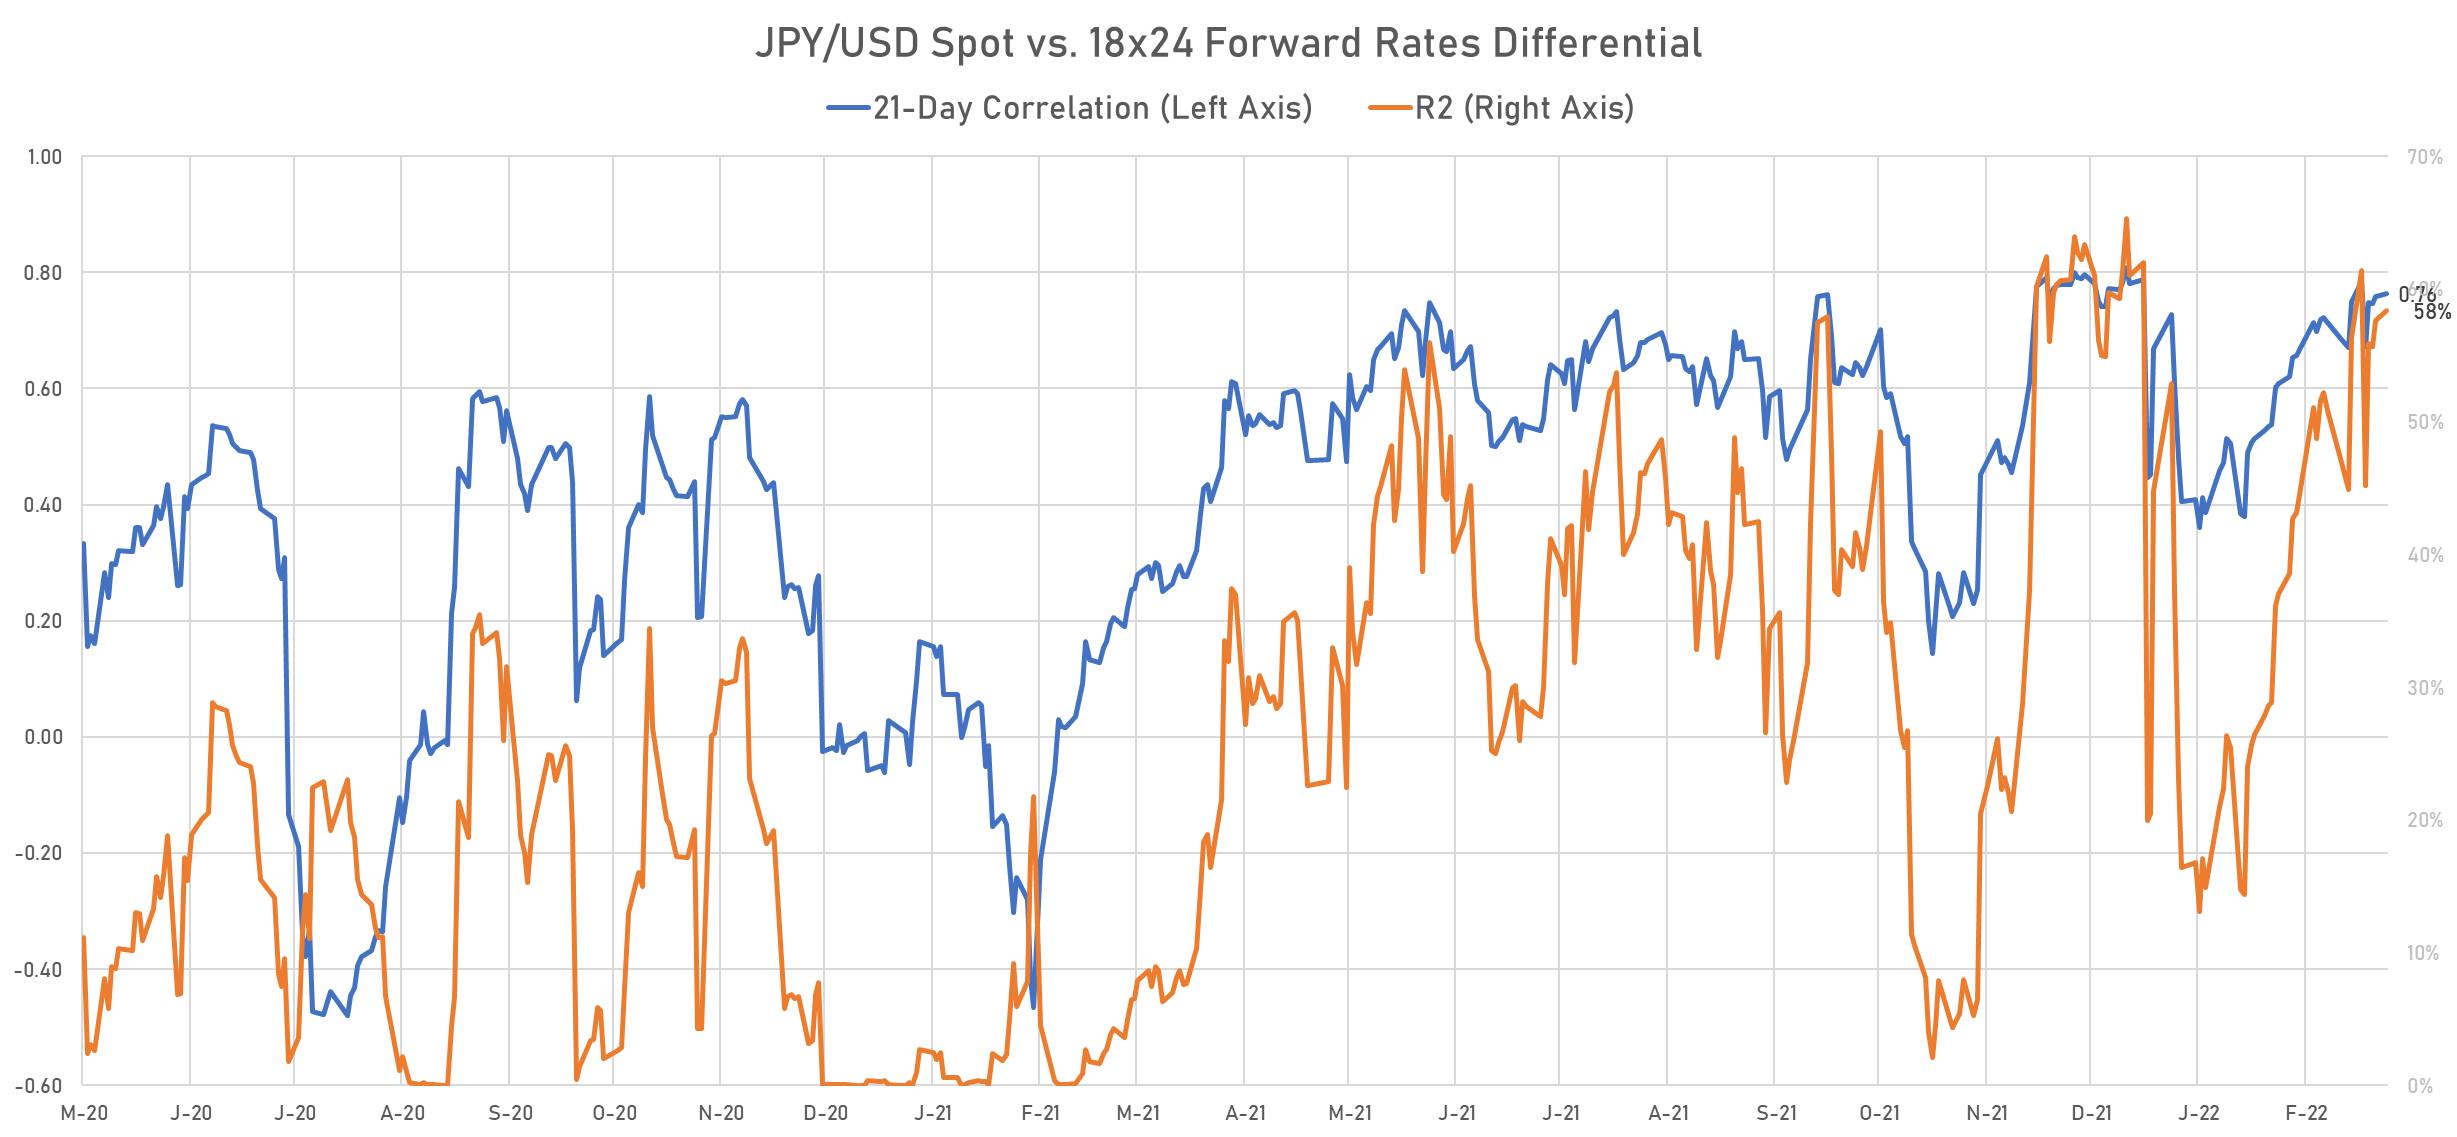 JPY spot vs rates differentials | Sources: phipost.com, Refinitiv data